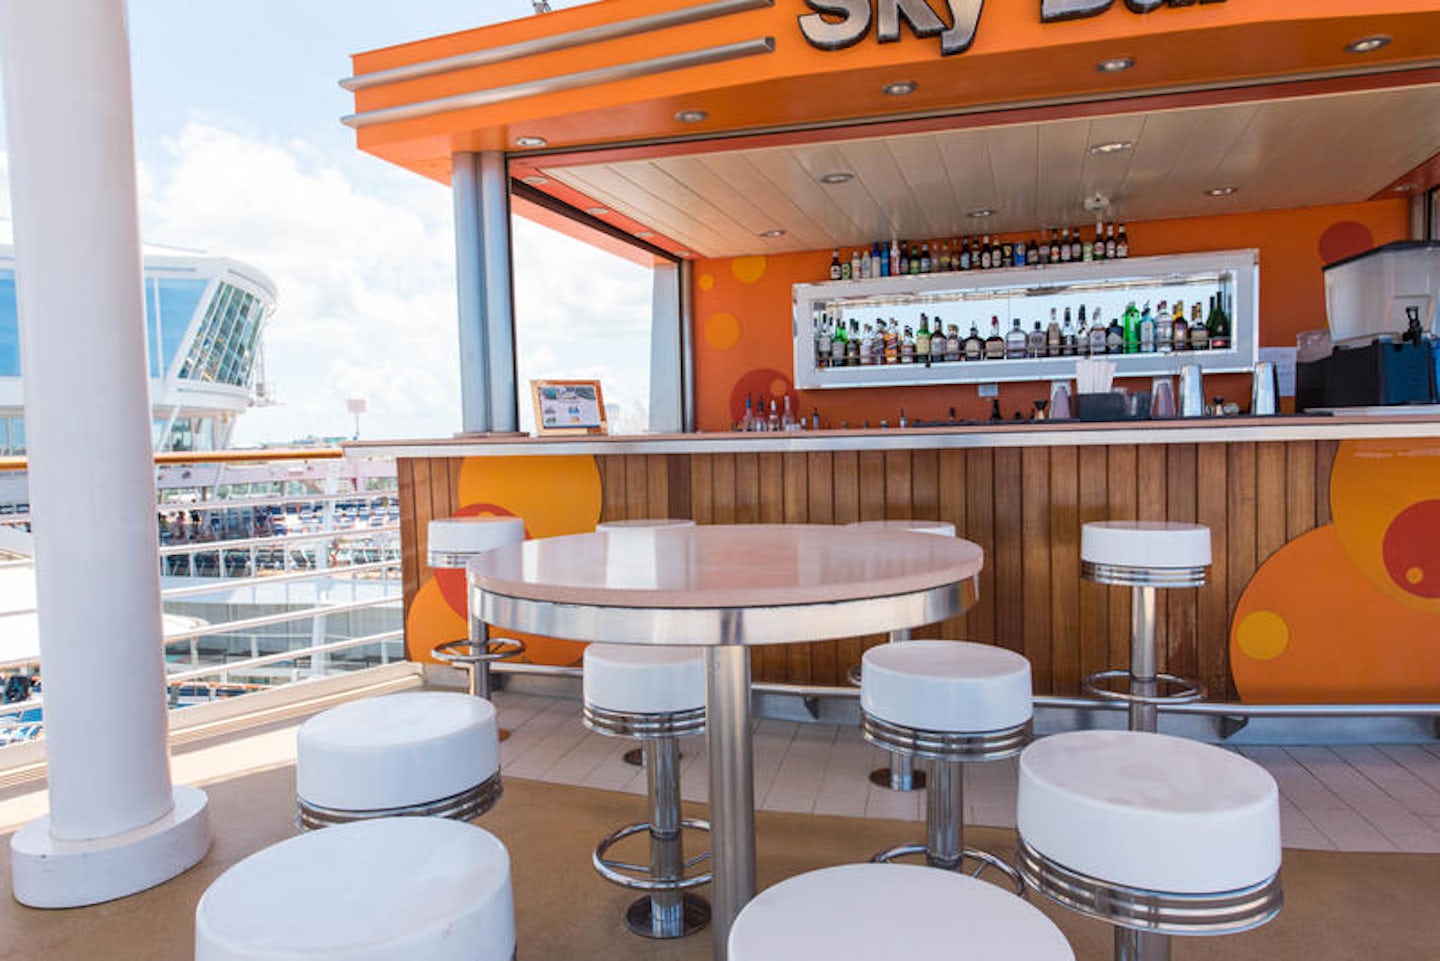 Sky Bar on Oasis of the Seas